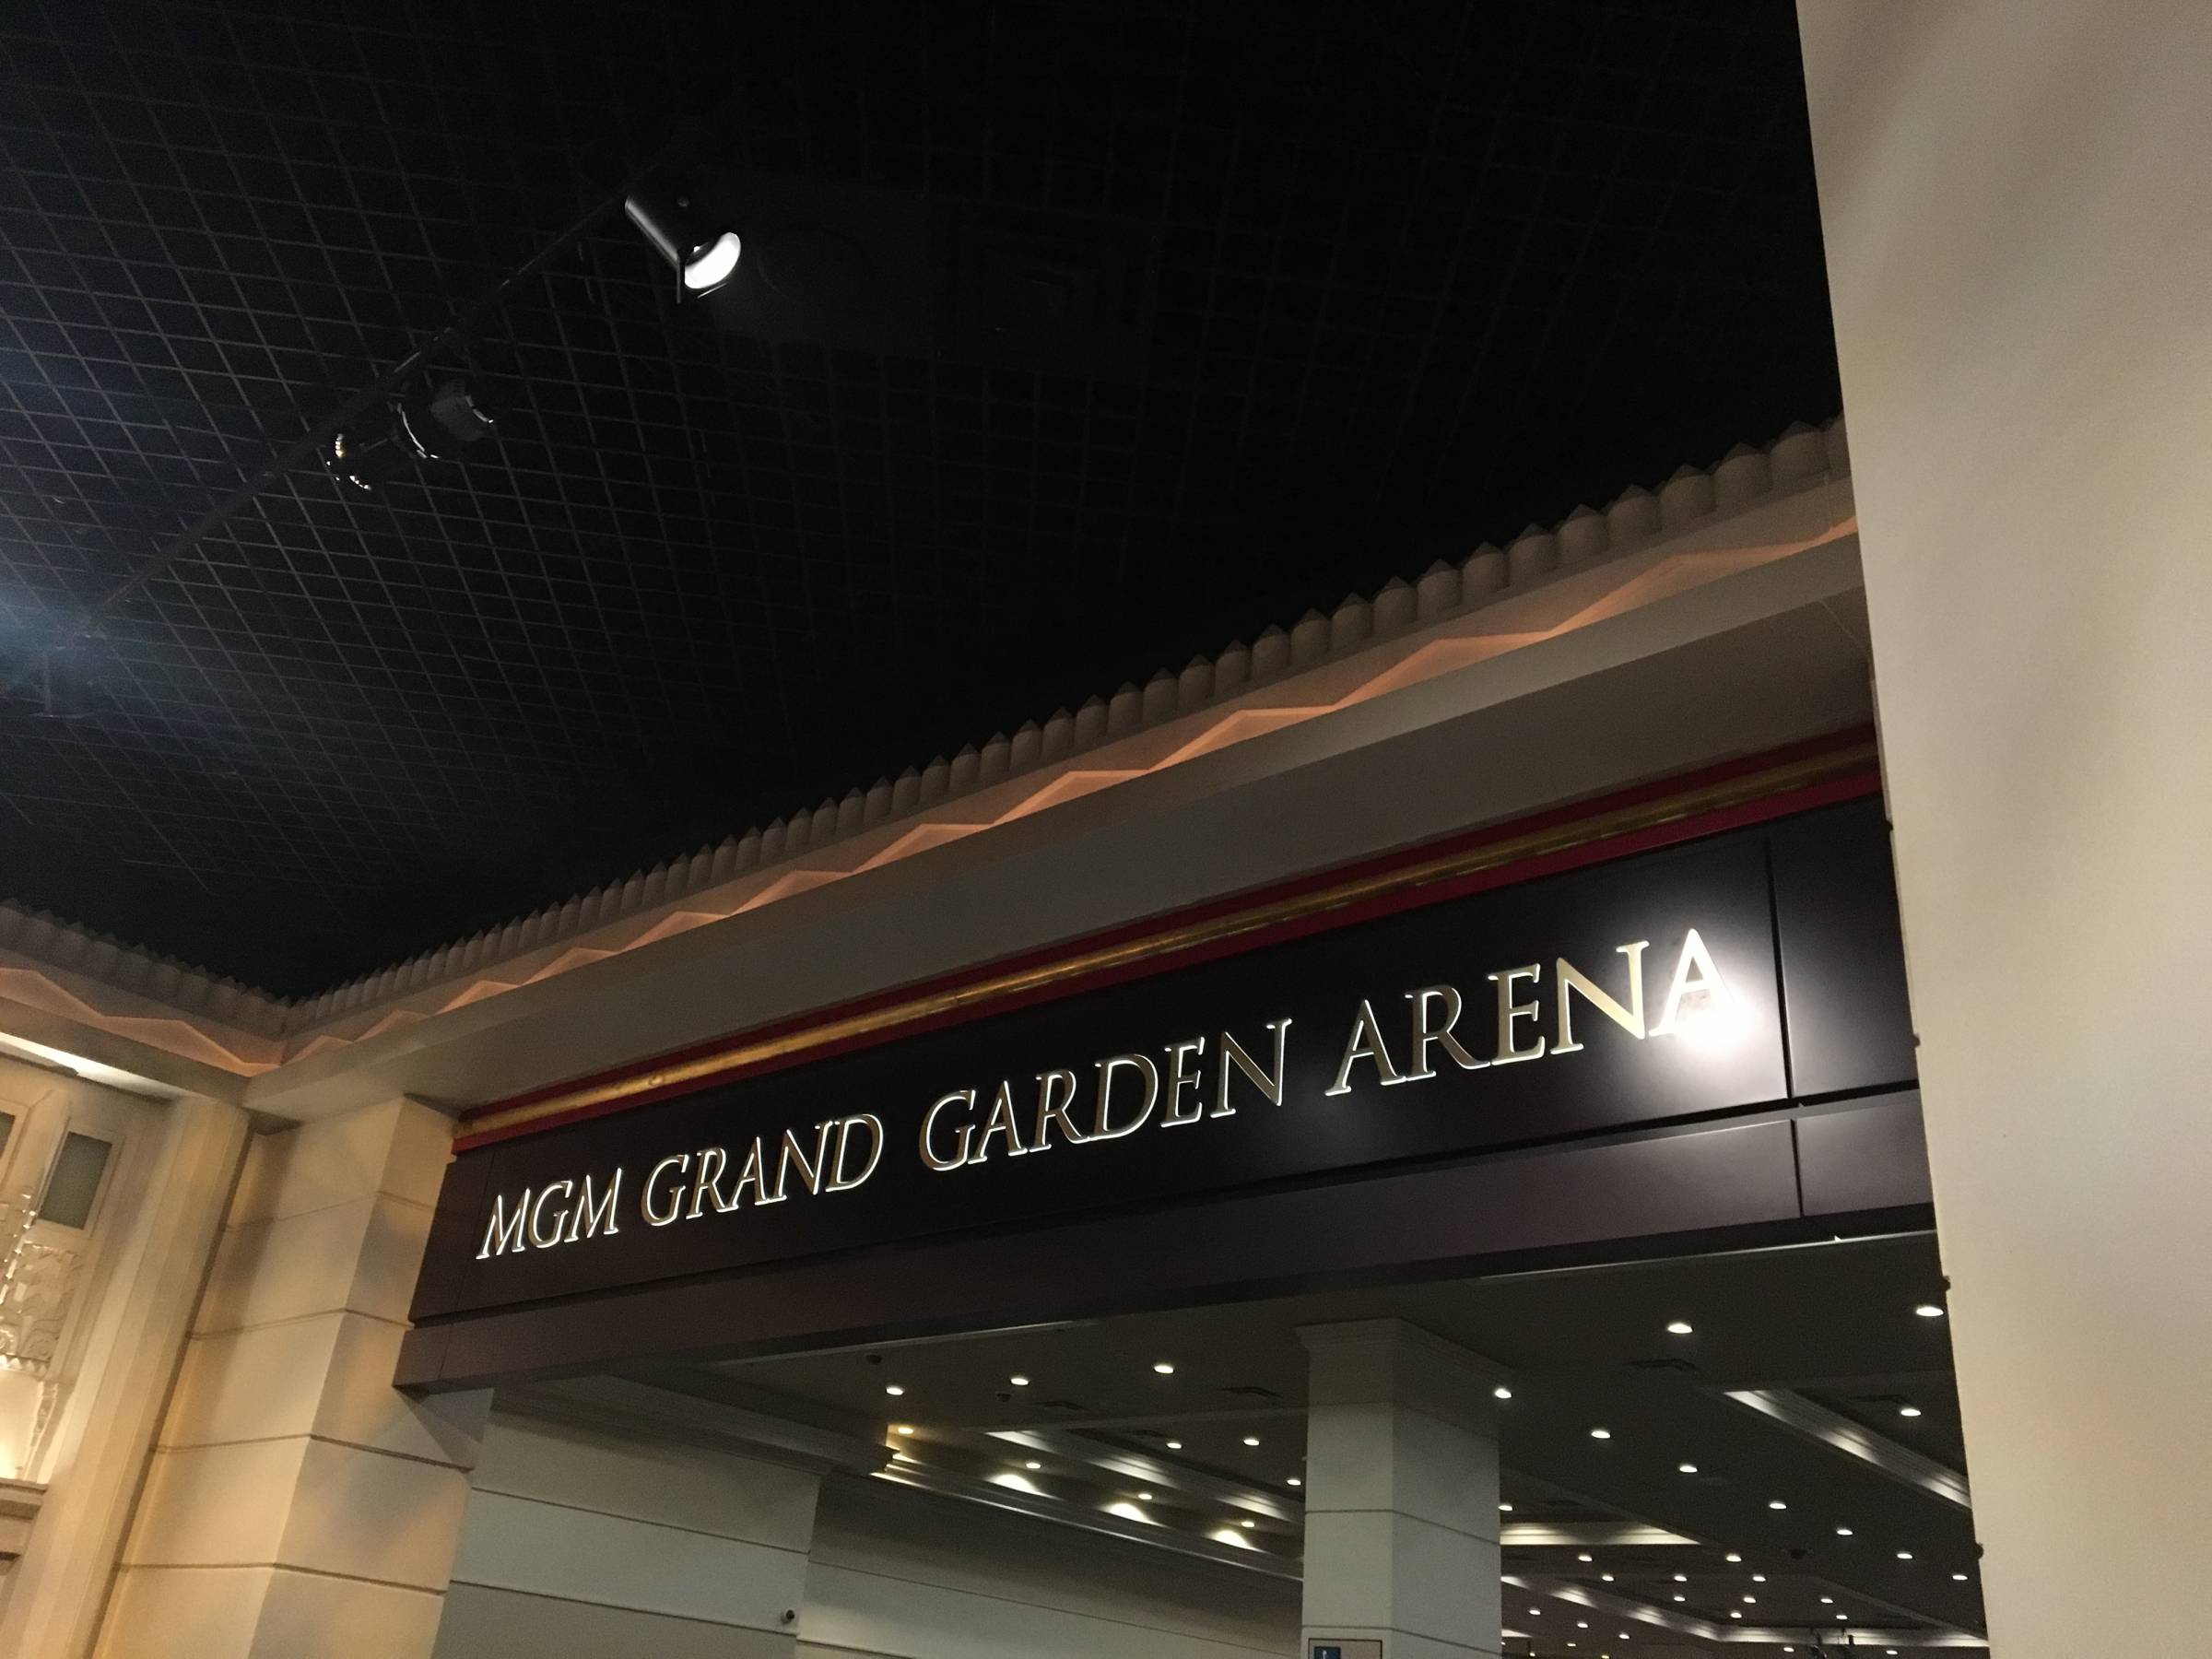 Entrance to MGM Grand Garden Arena